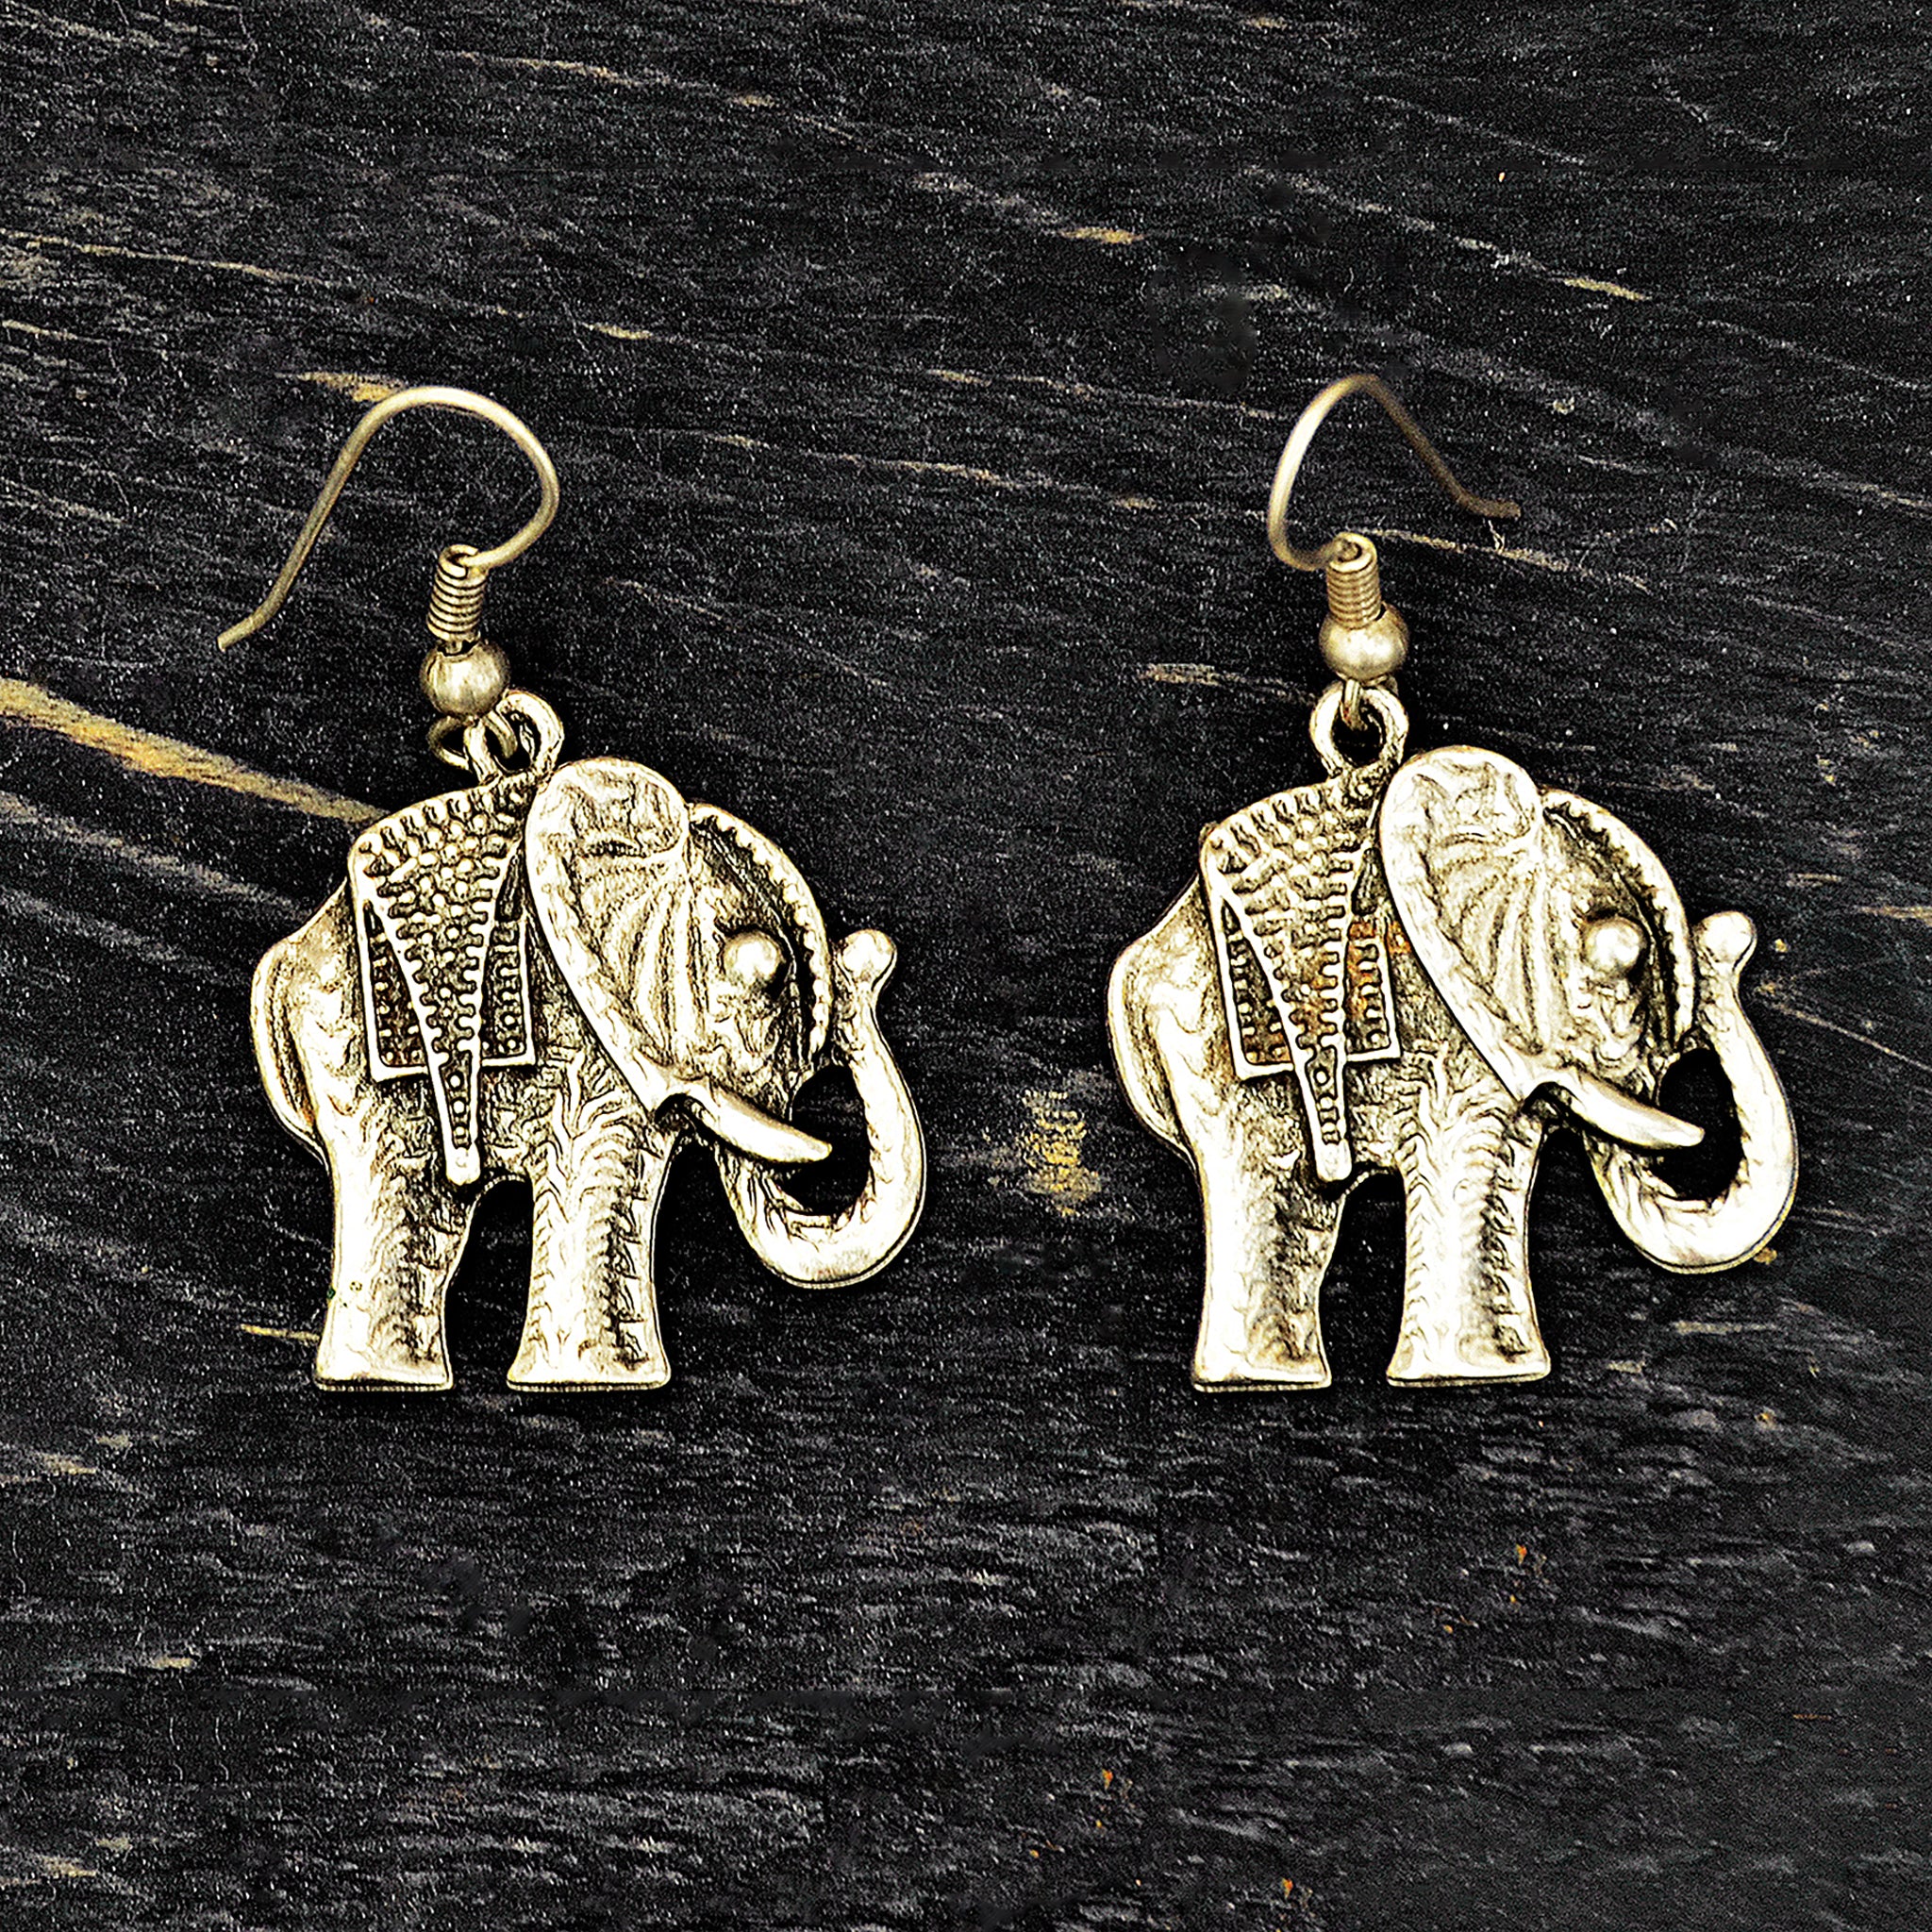 Small silver elephant earrings